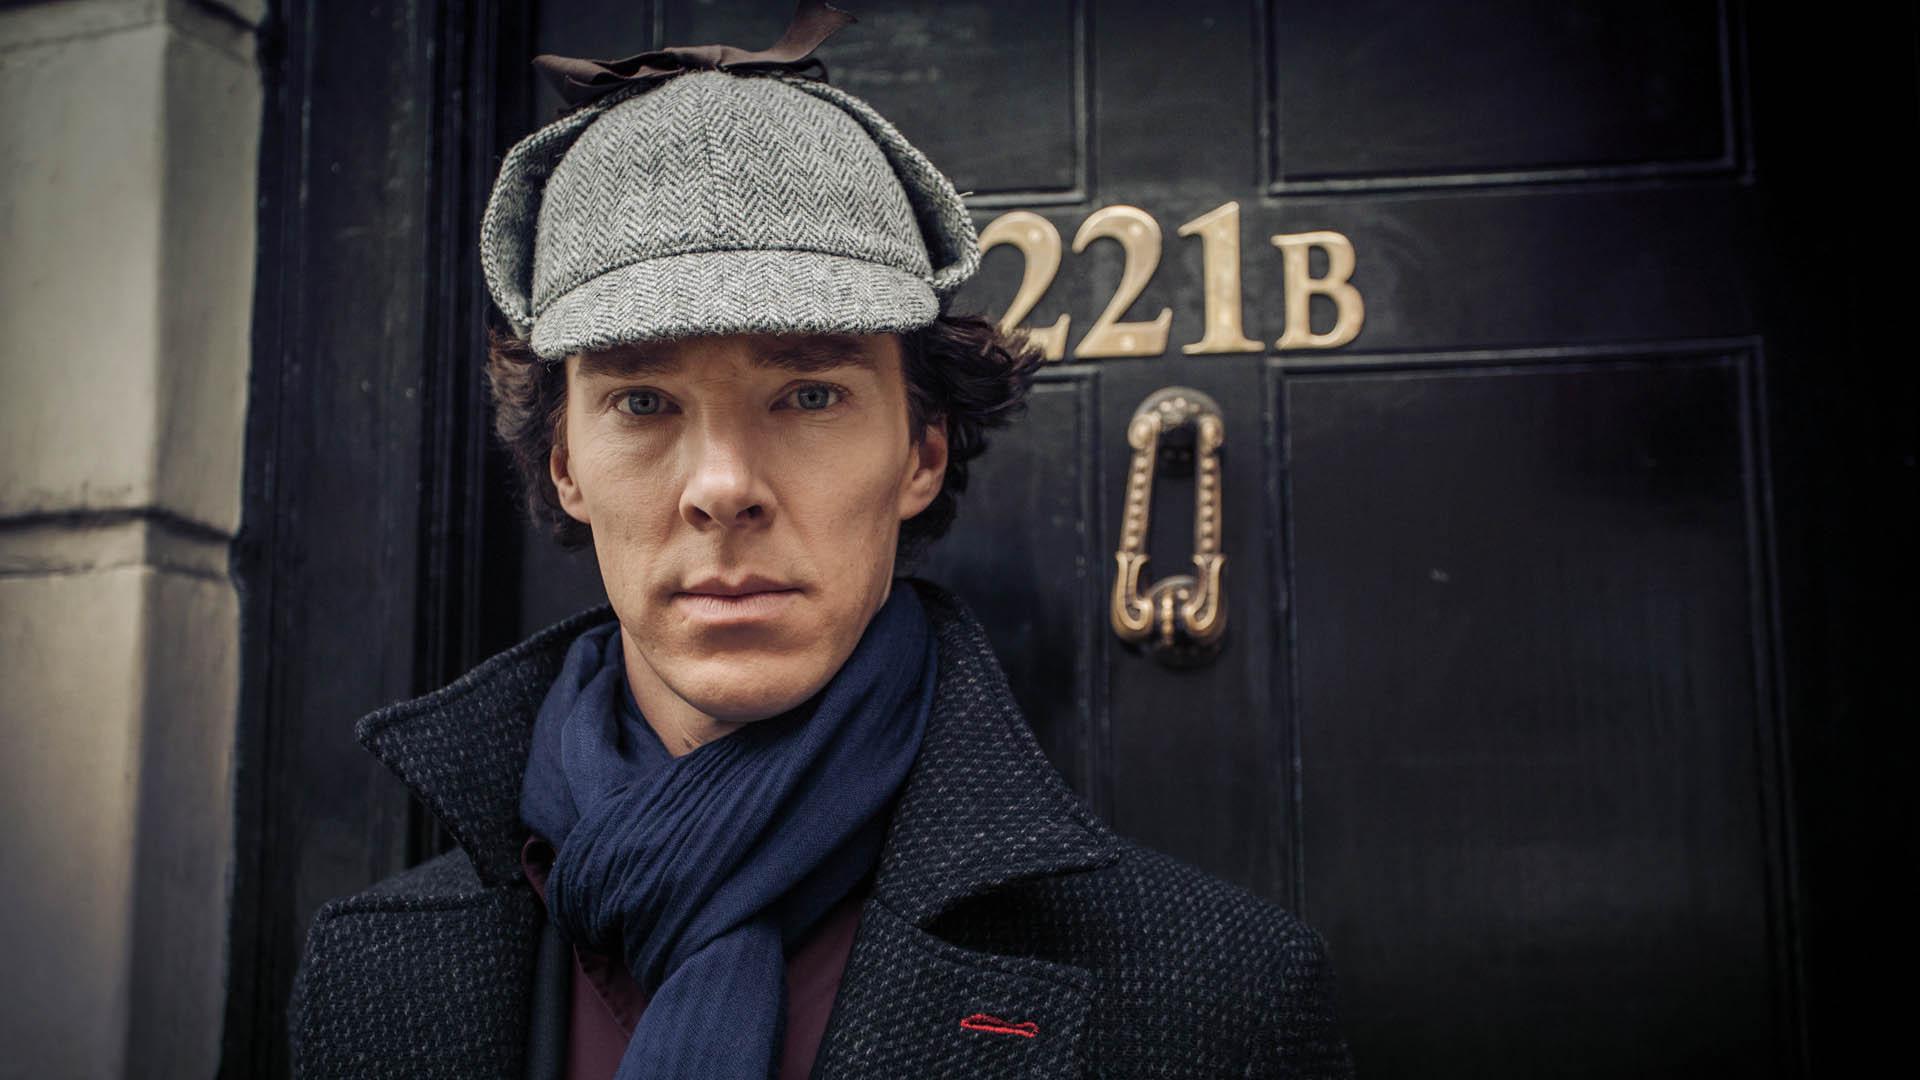 Benedict Cumberbatch in Sherlock 2014 Wallpaper Wide or HD. Male